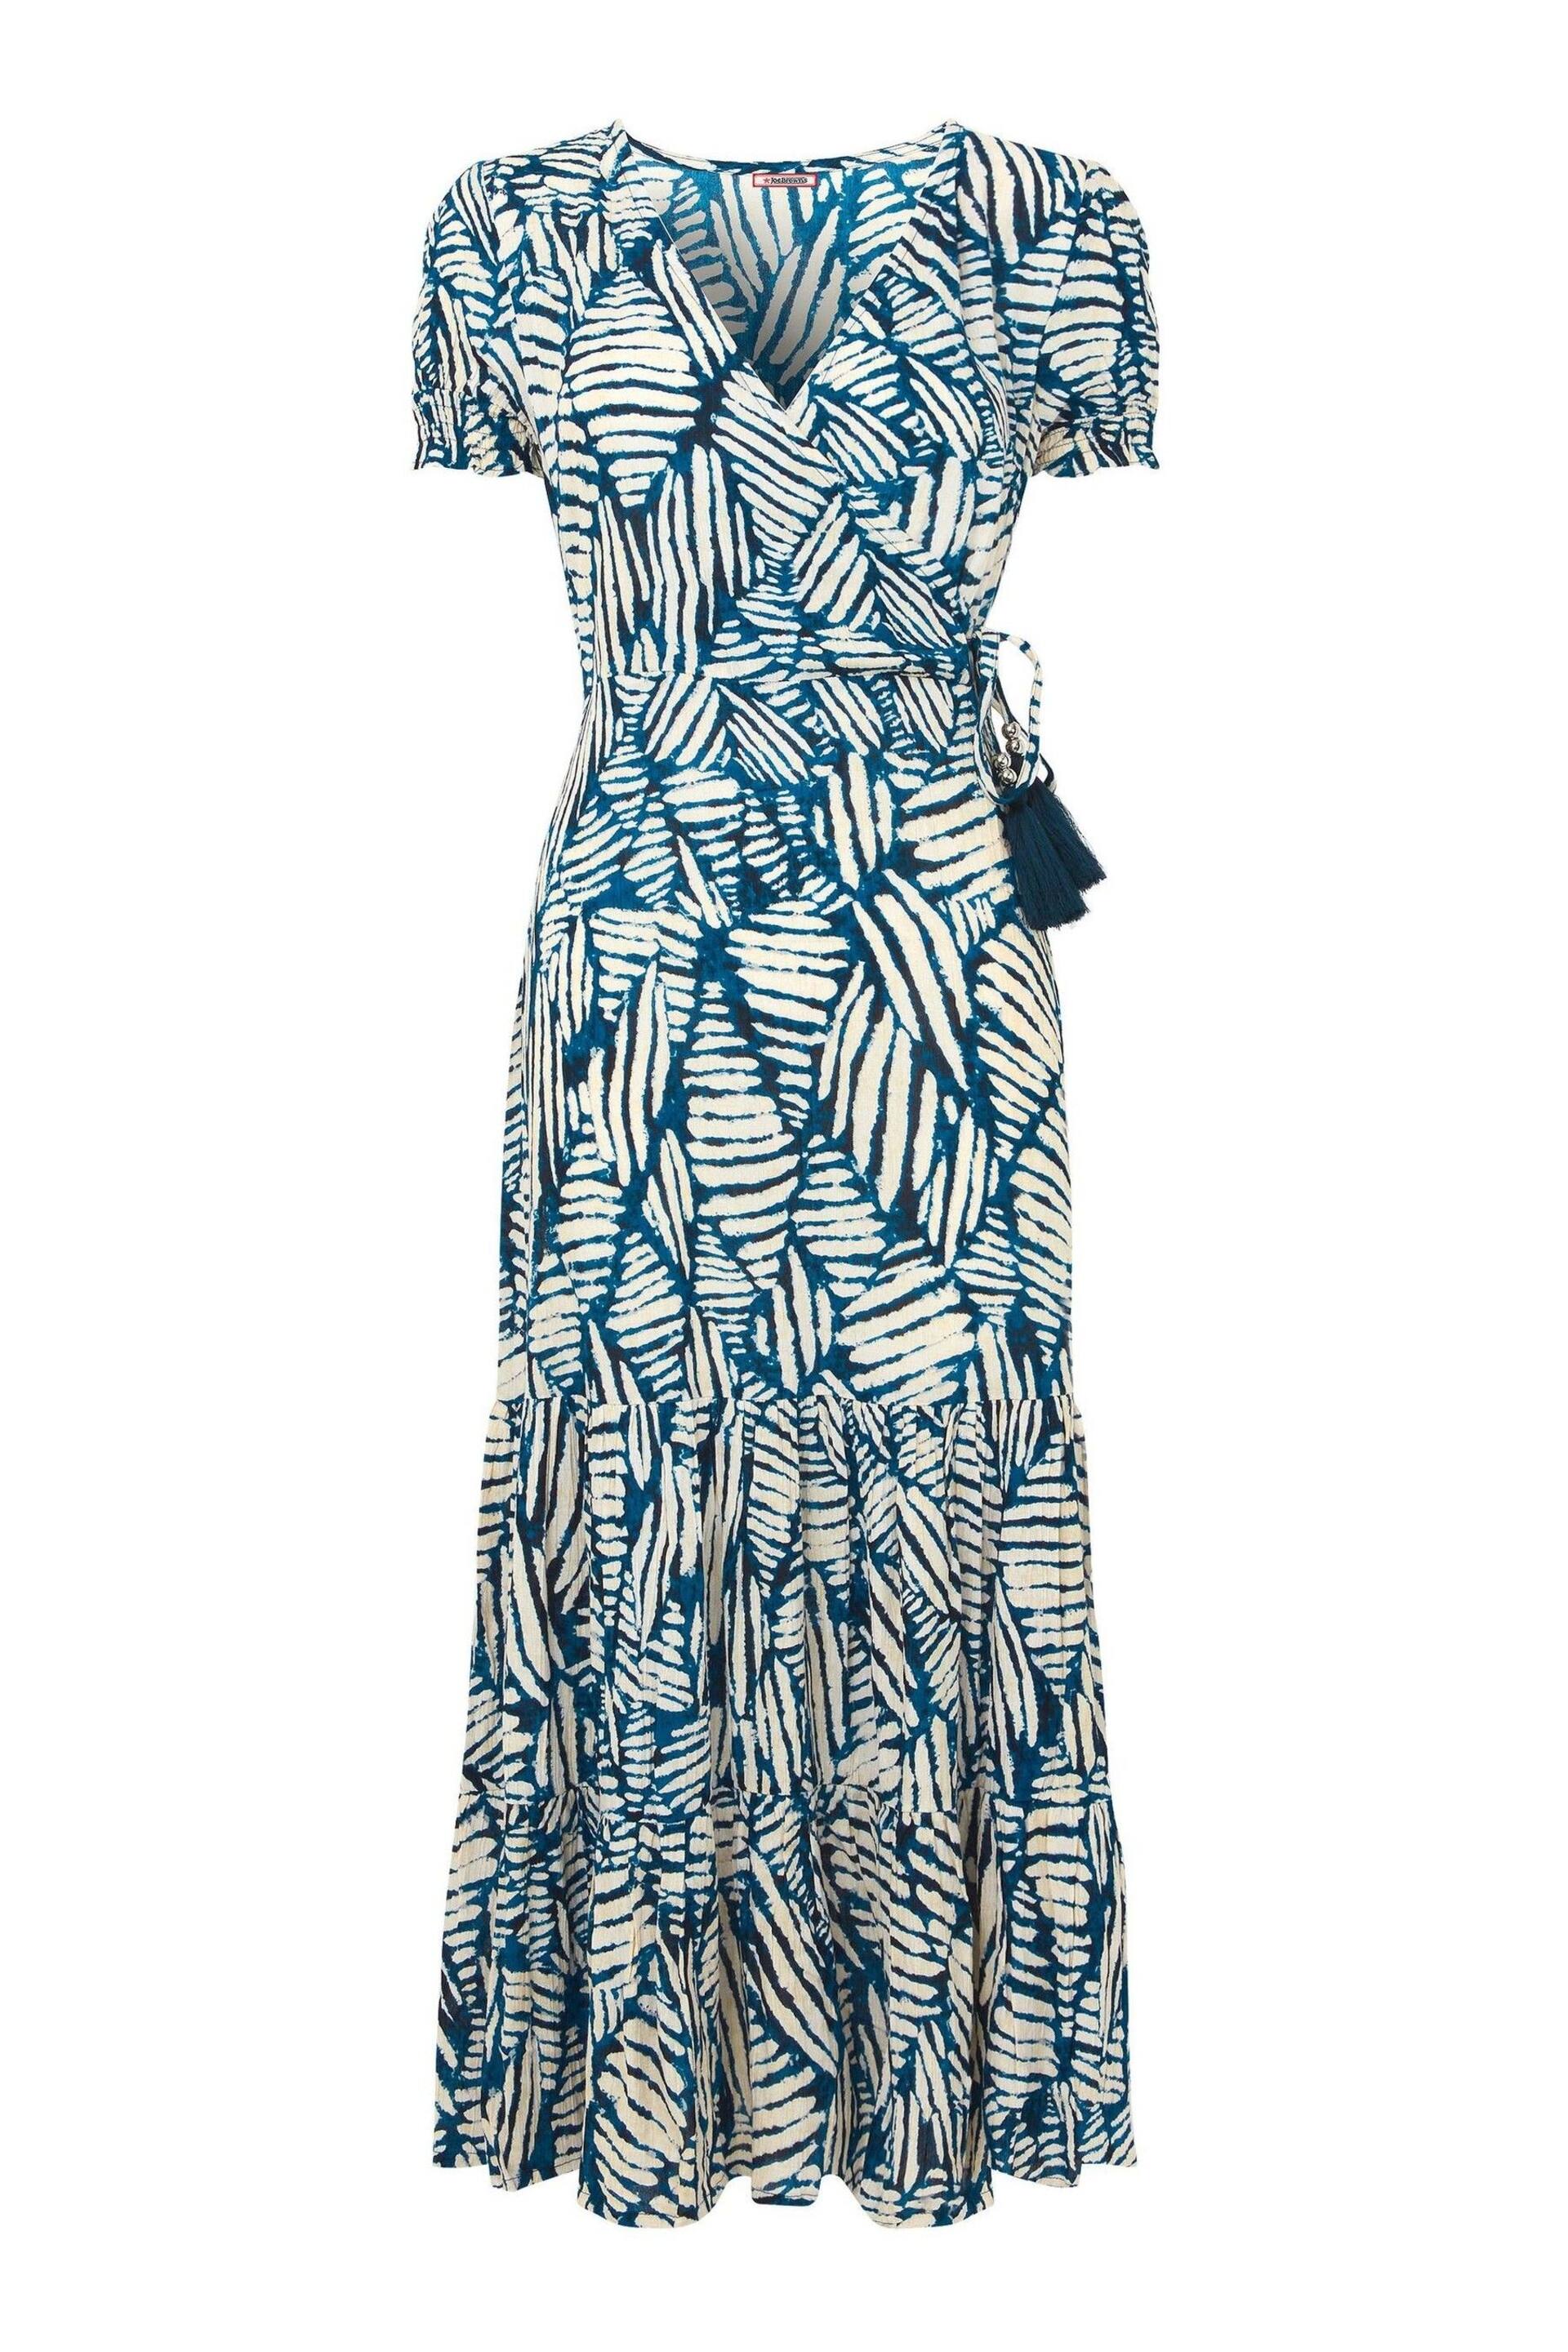 Joe Browns Blue Fern Print Crinkle Midi Dress - Image 5 of 5